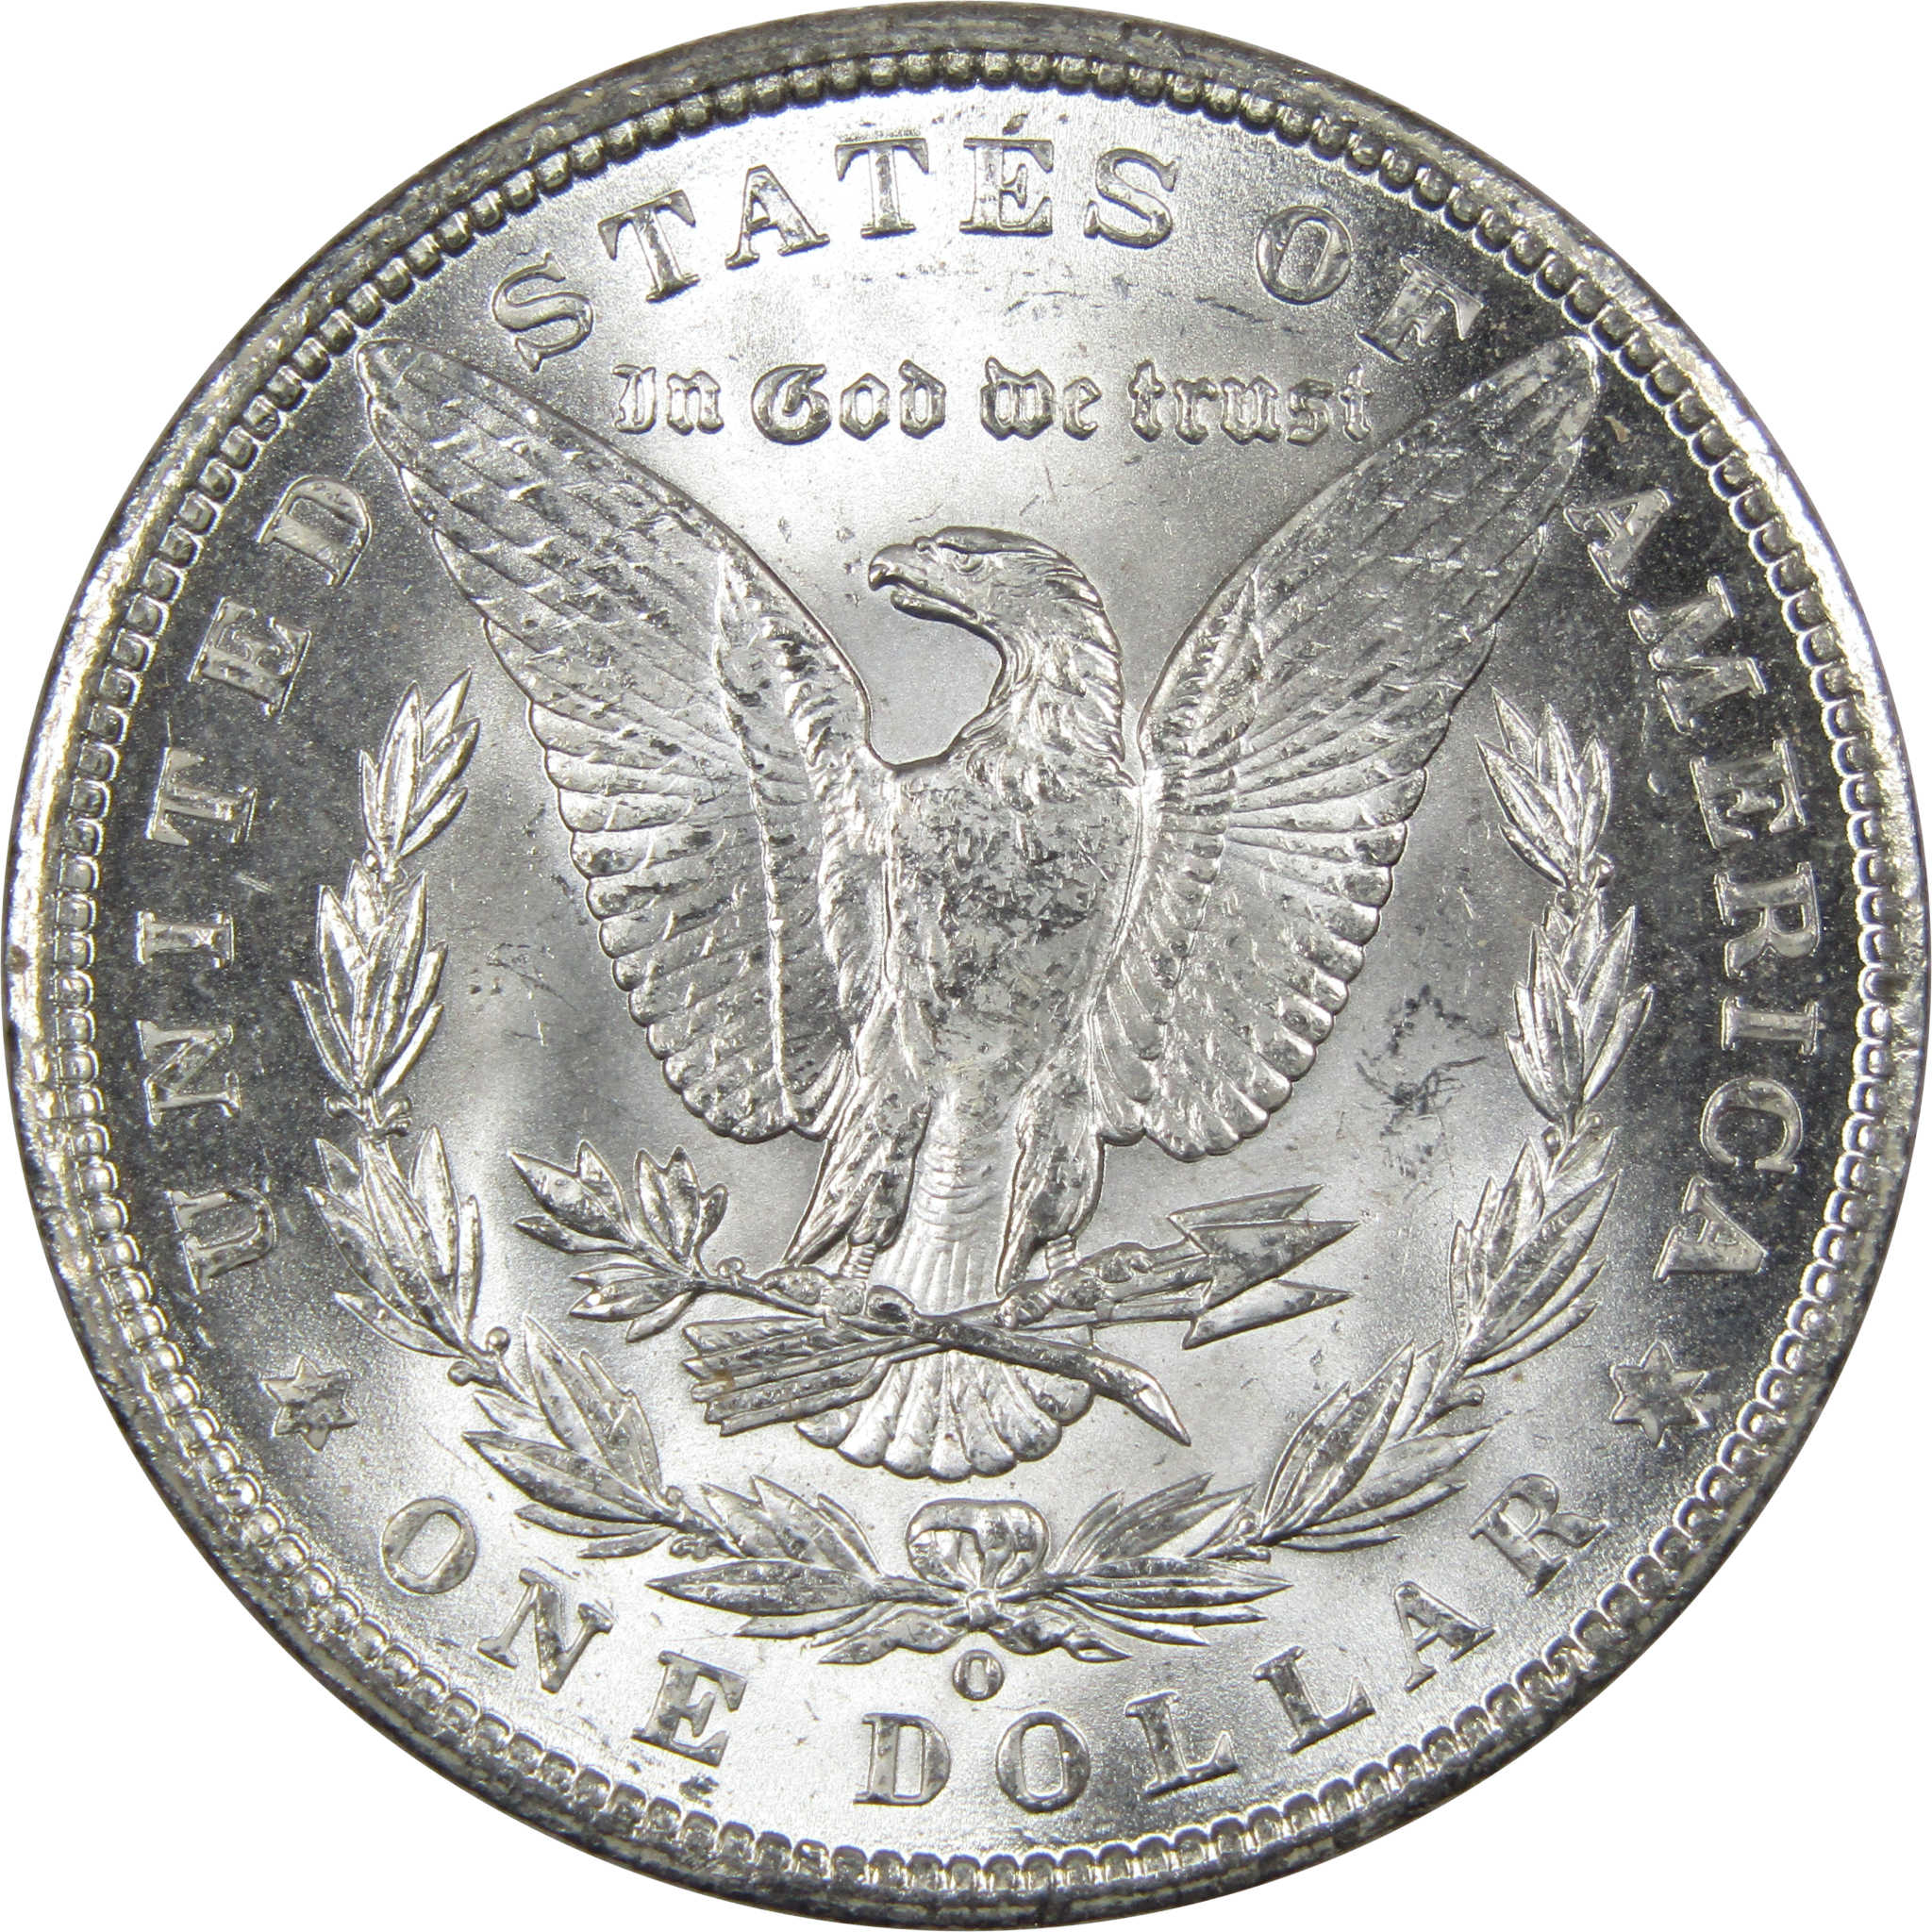 1900 O Morgan Dollar BU Uncirculated Mint State 90% Silver SKU:IPC9779 - Morgan coin - Morgan silver dollar - Morgan silver dollar for sale - Profile Coins &amp; Collectibles